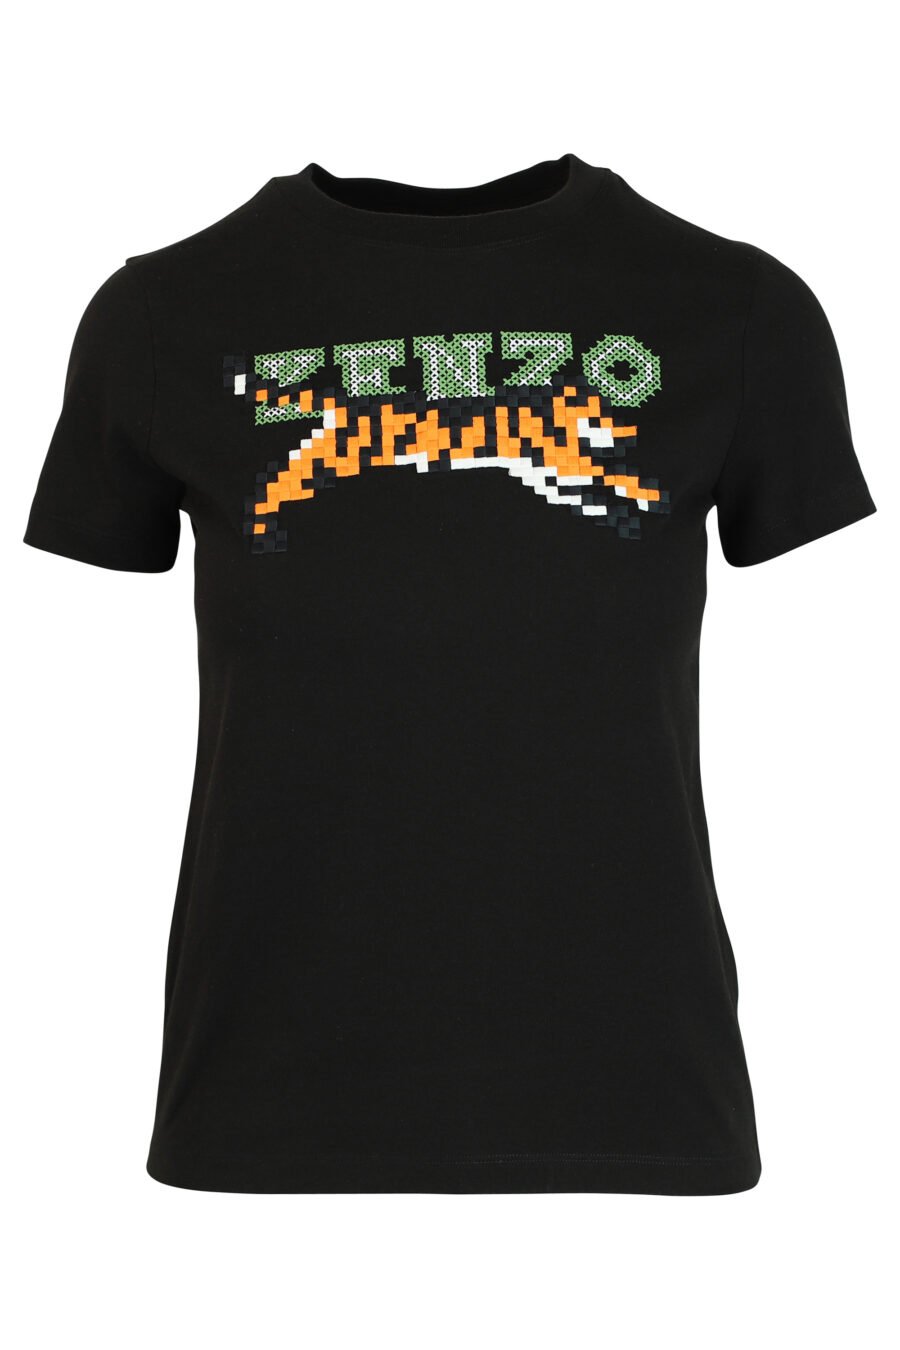 Schwarzes T-Shirt mit Tiger-Maxilogo - 3612230460195